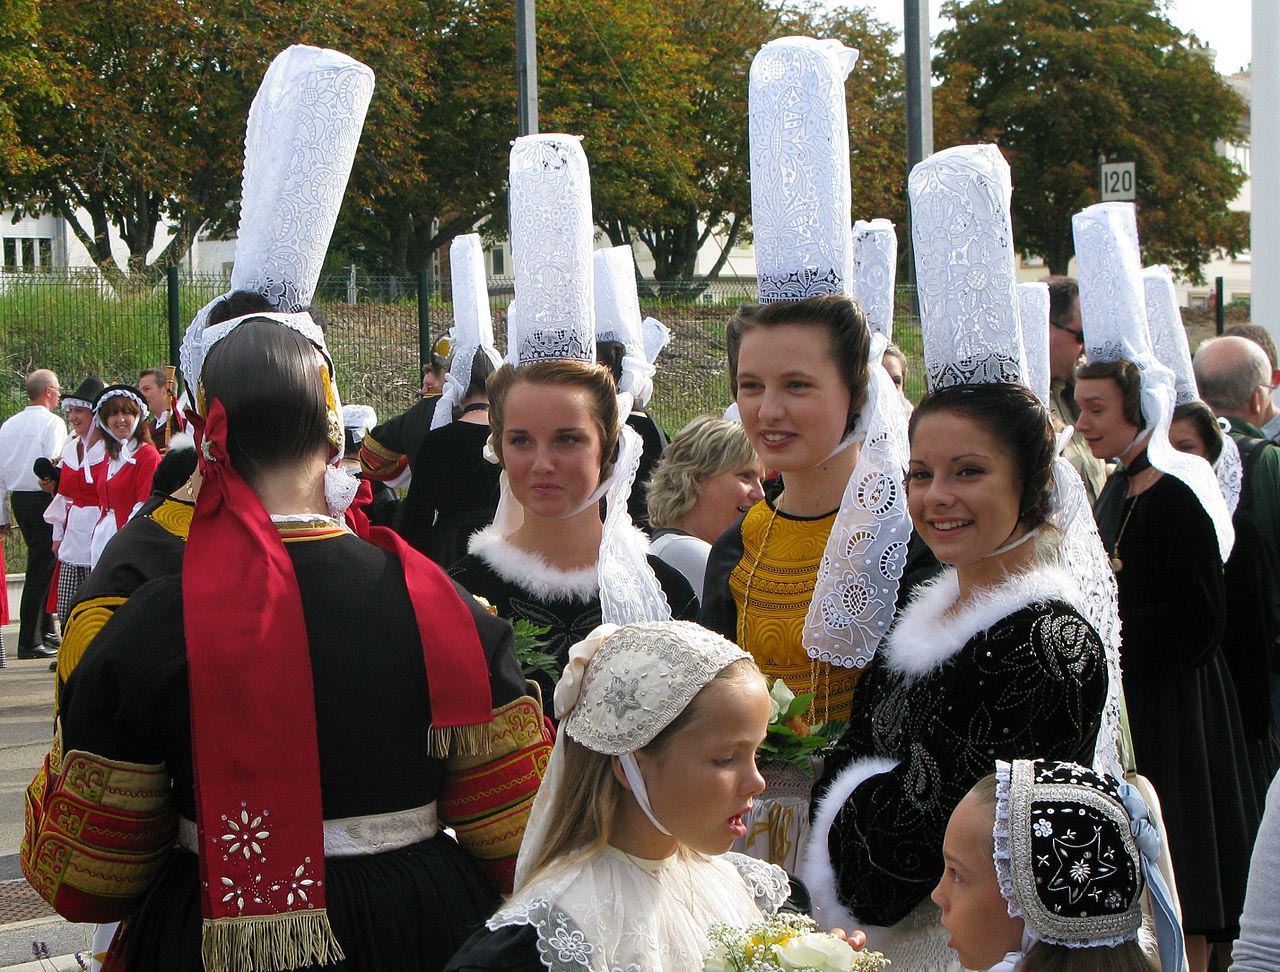 Breton Traditional Headdresses